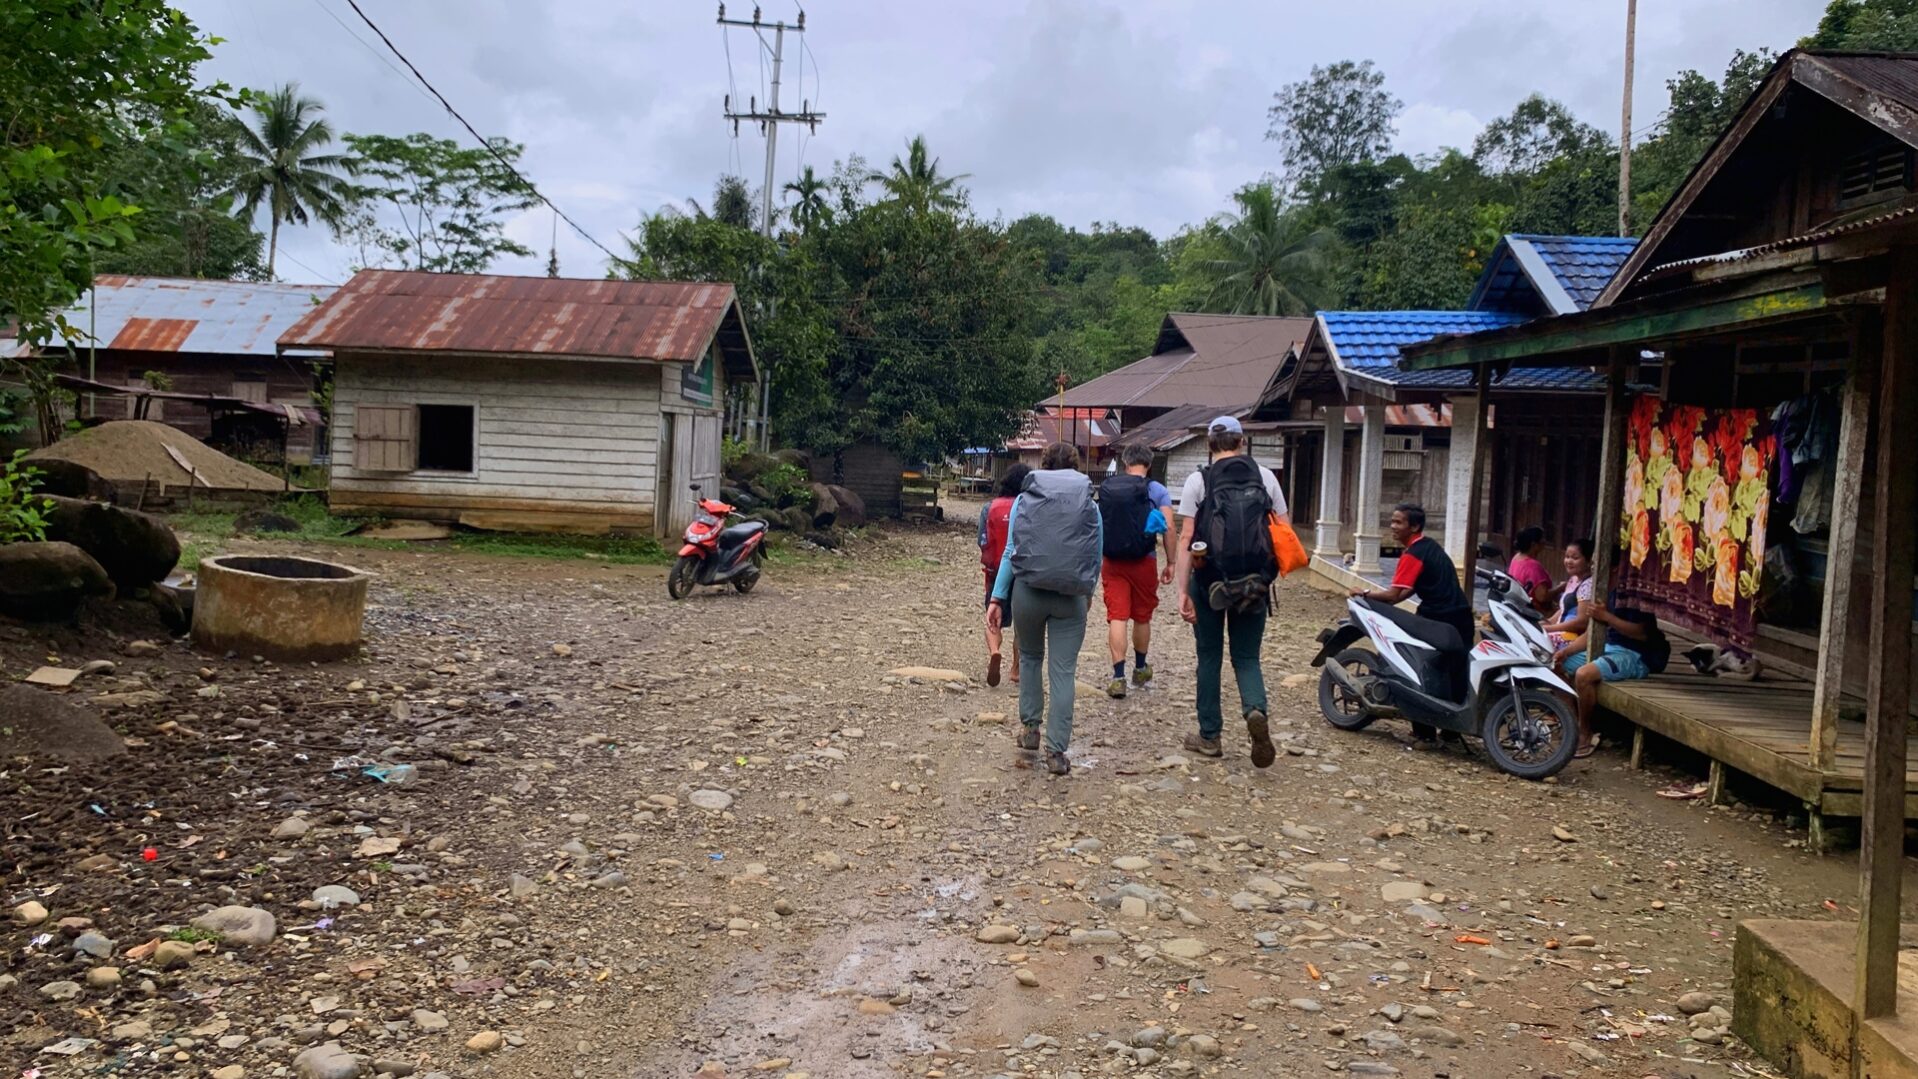 Kalimantan hike